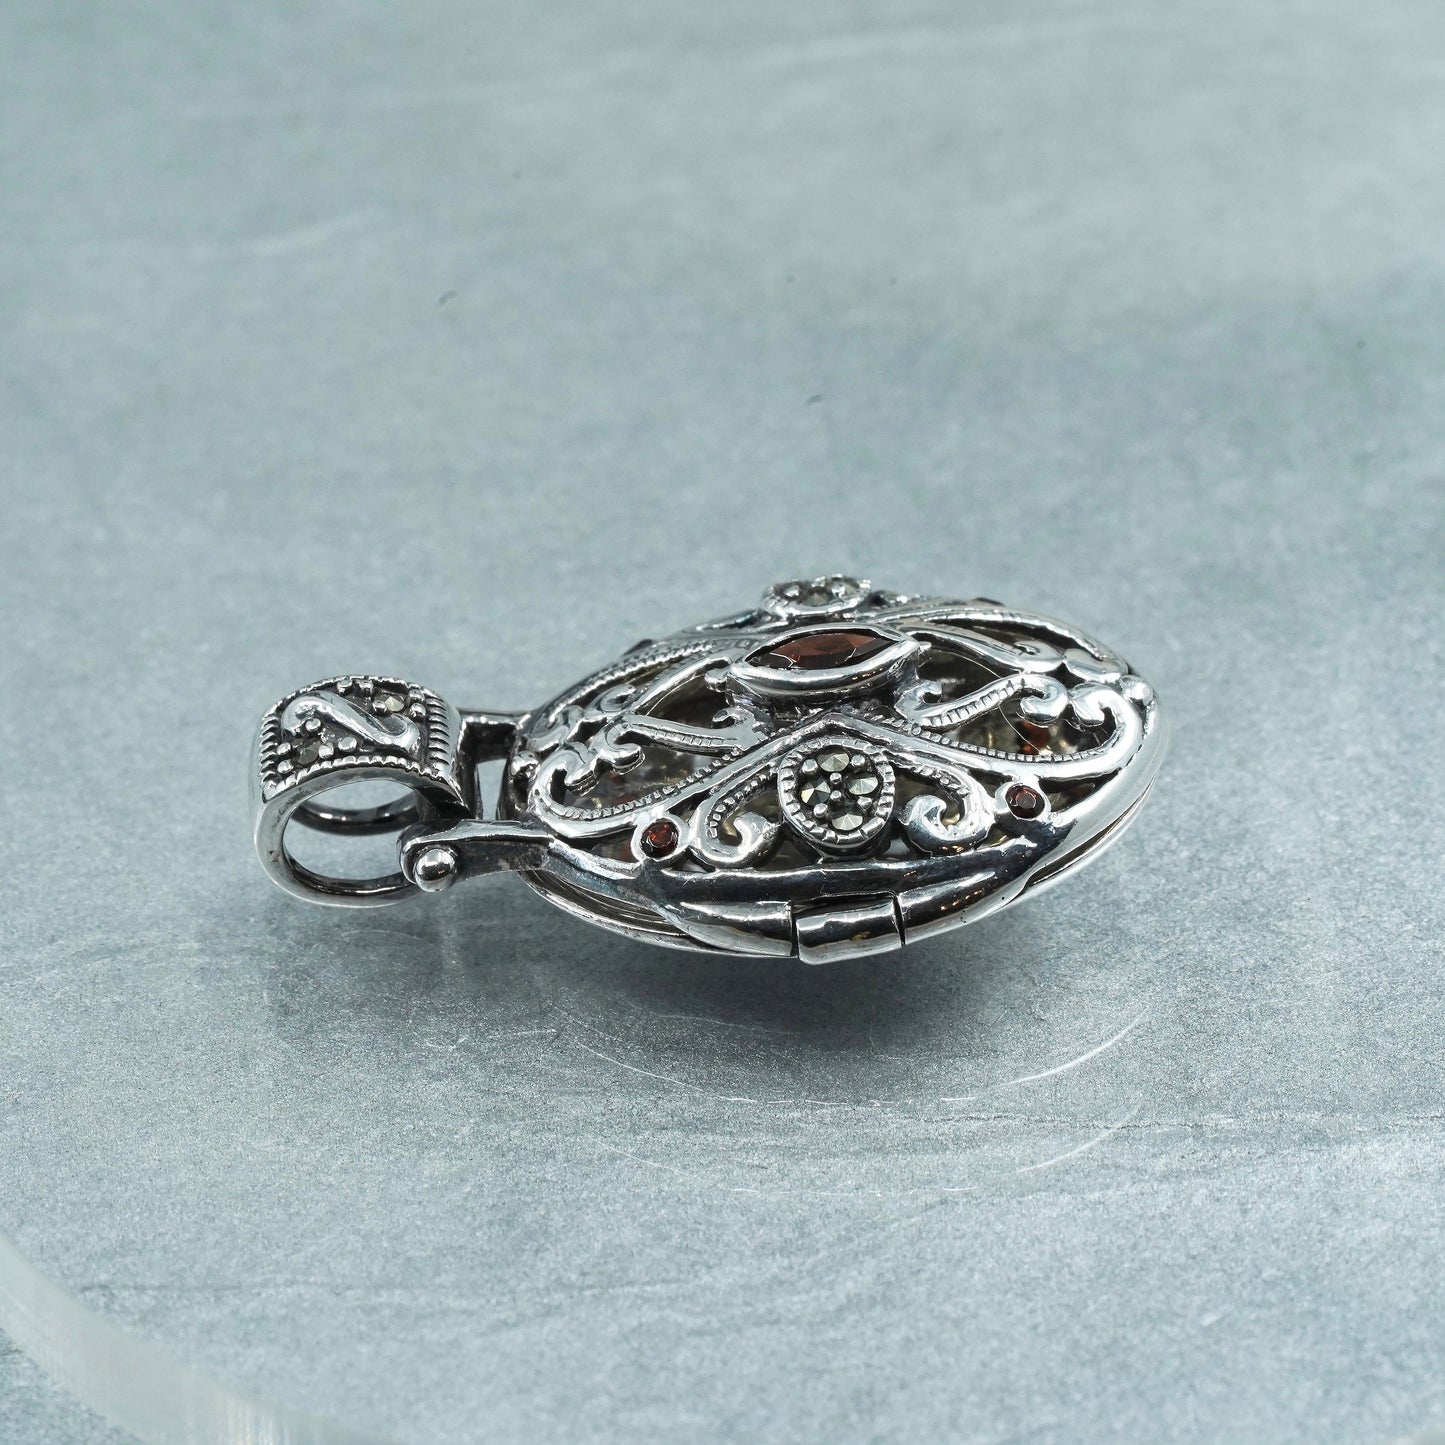 Vintage Sterling silver handmade charm, 925 prayer locket pendant w/ marcasite